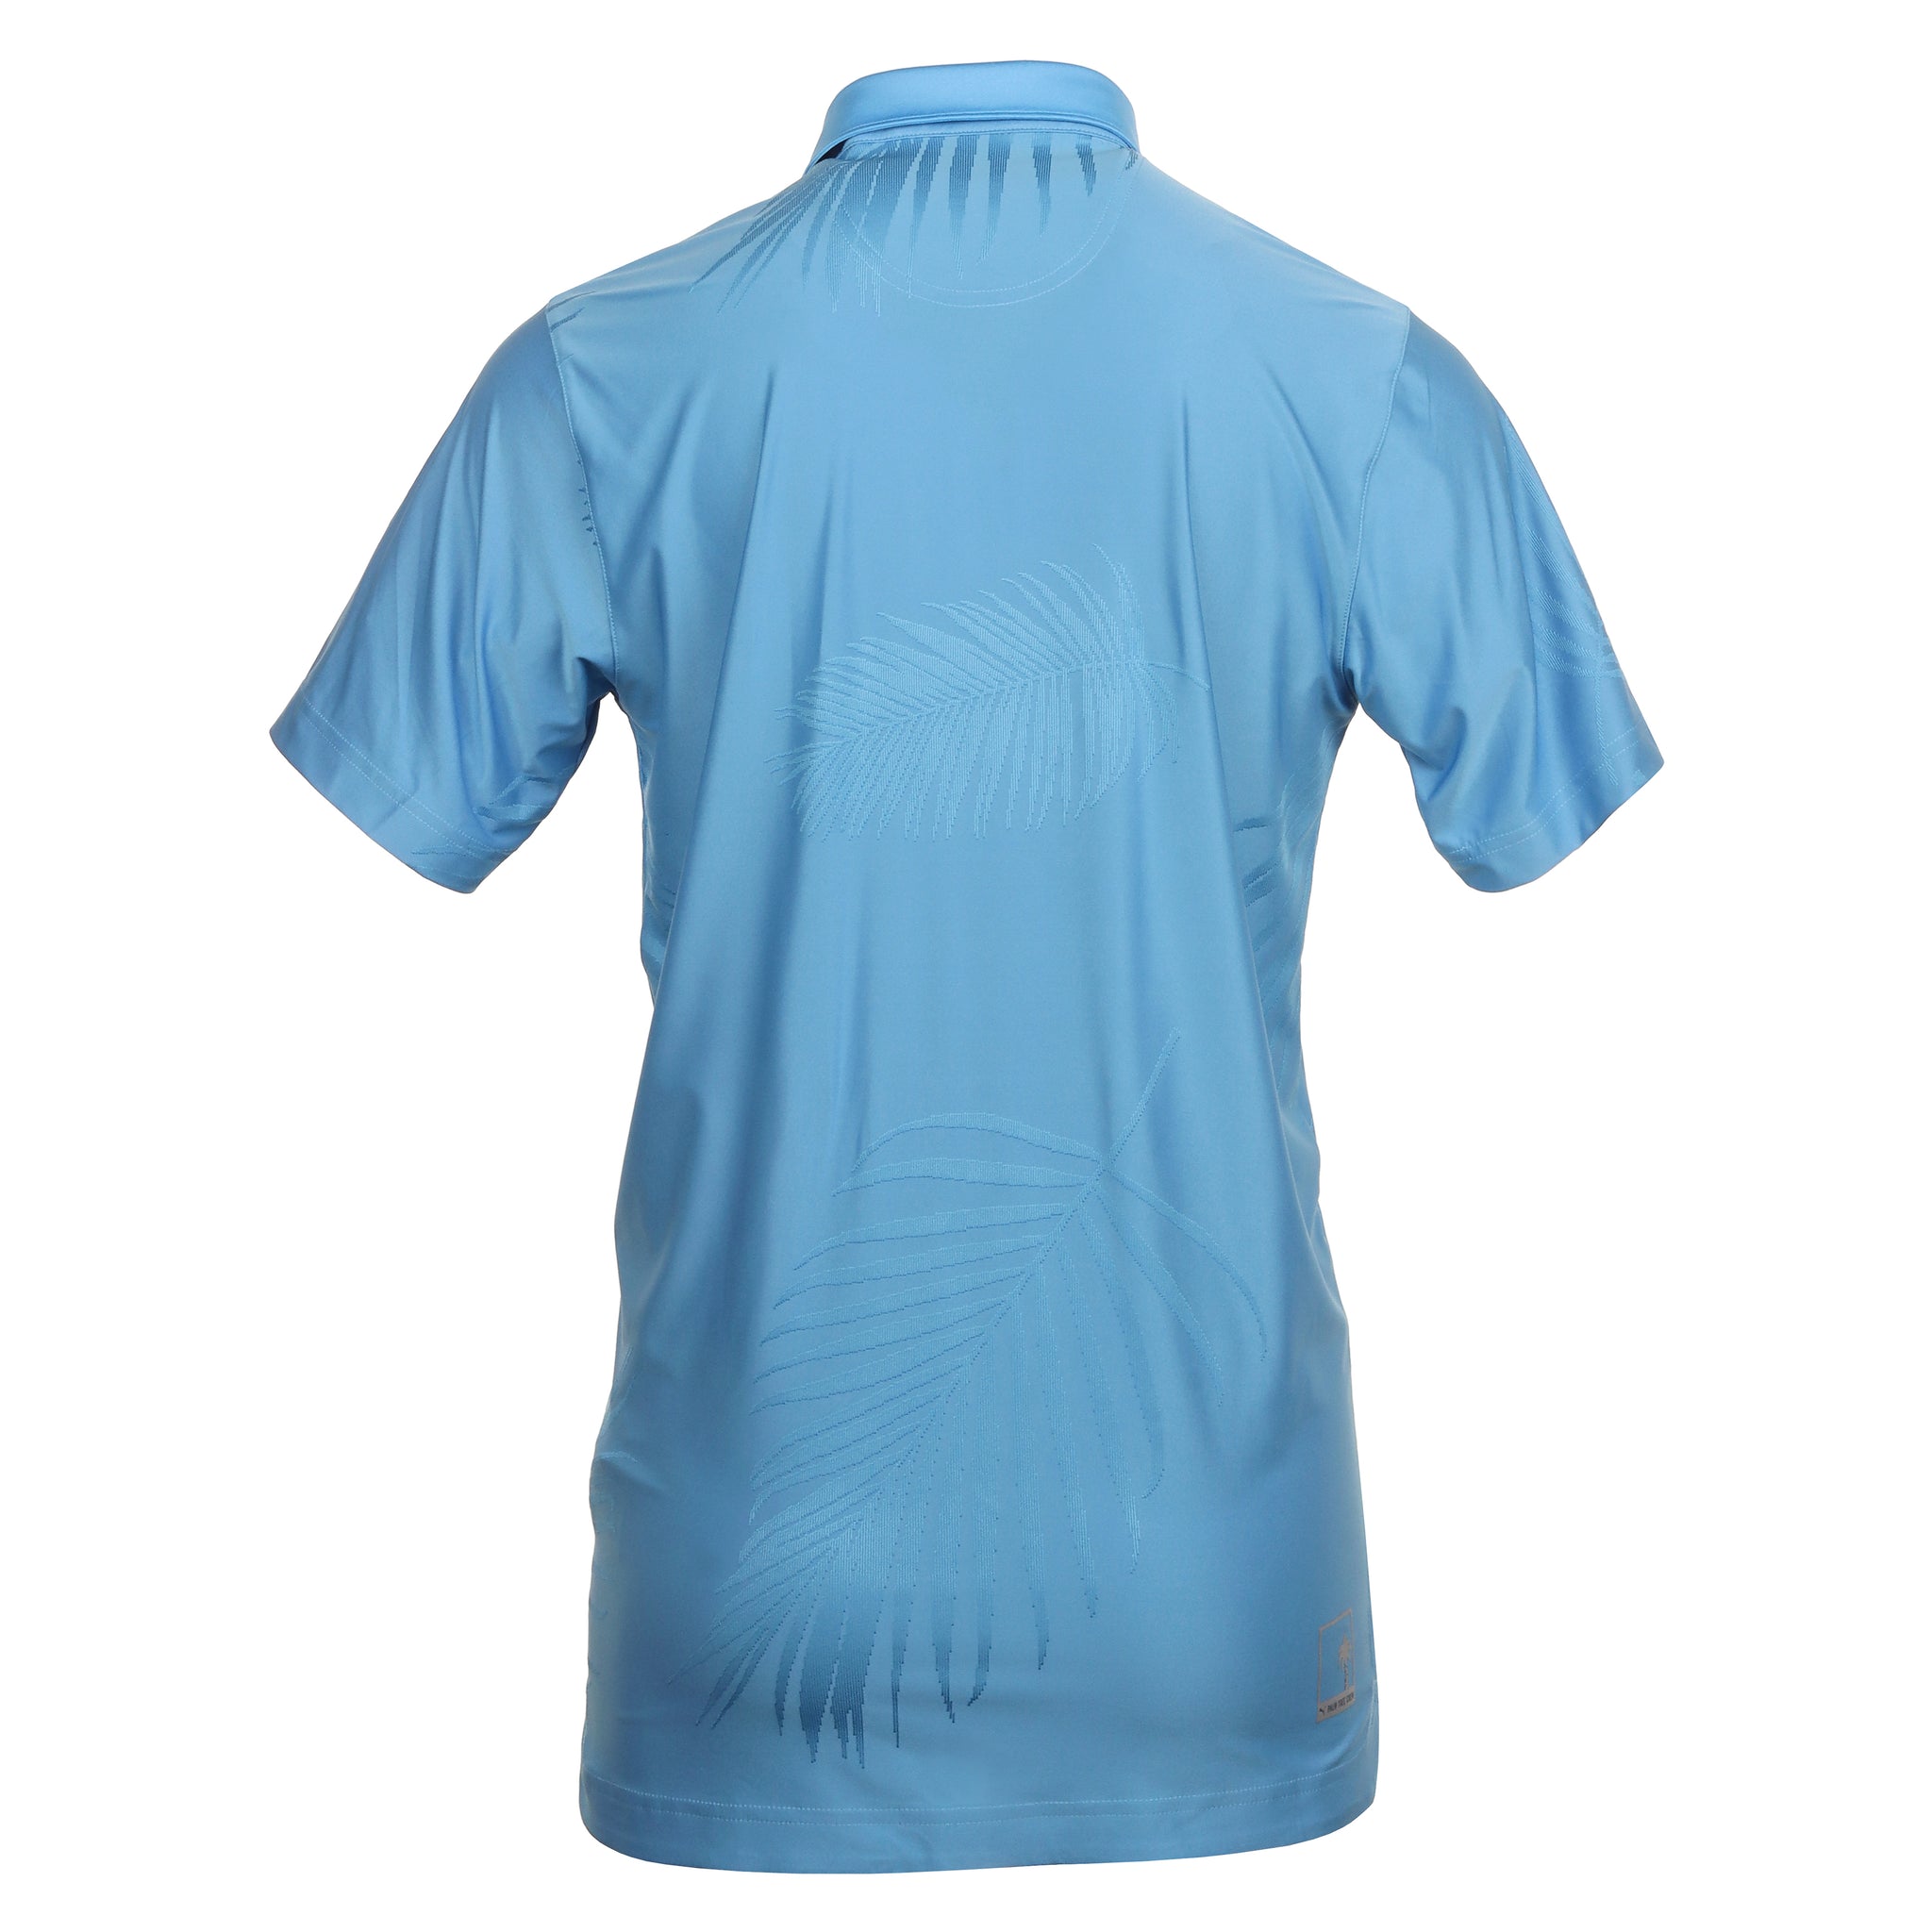 puma-golf-x-ptc-jacquard-shirt-623964-regal-blue-02